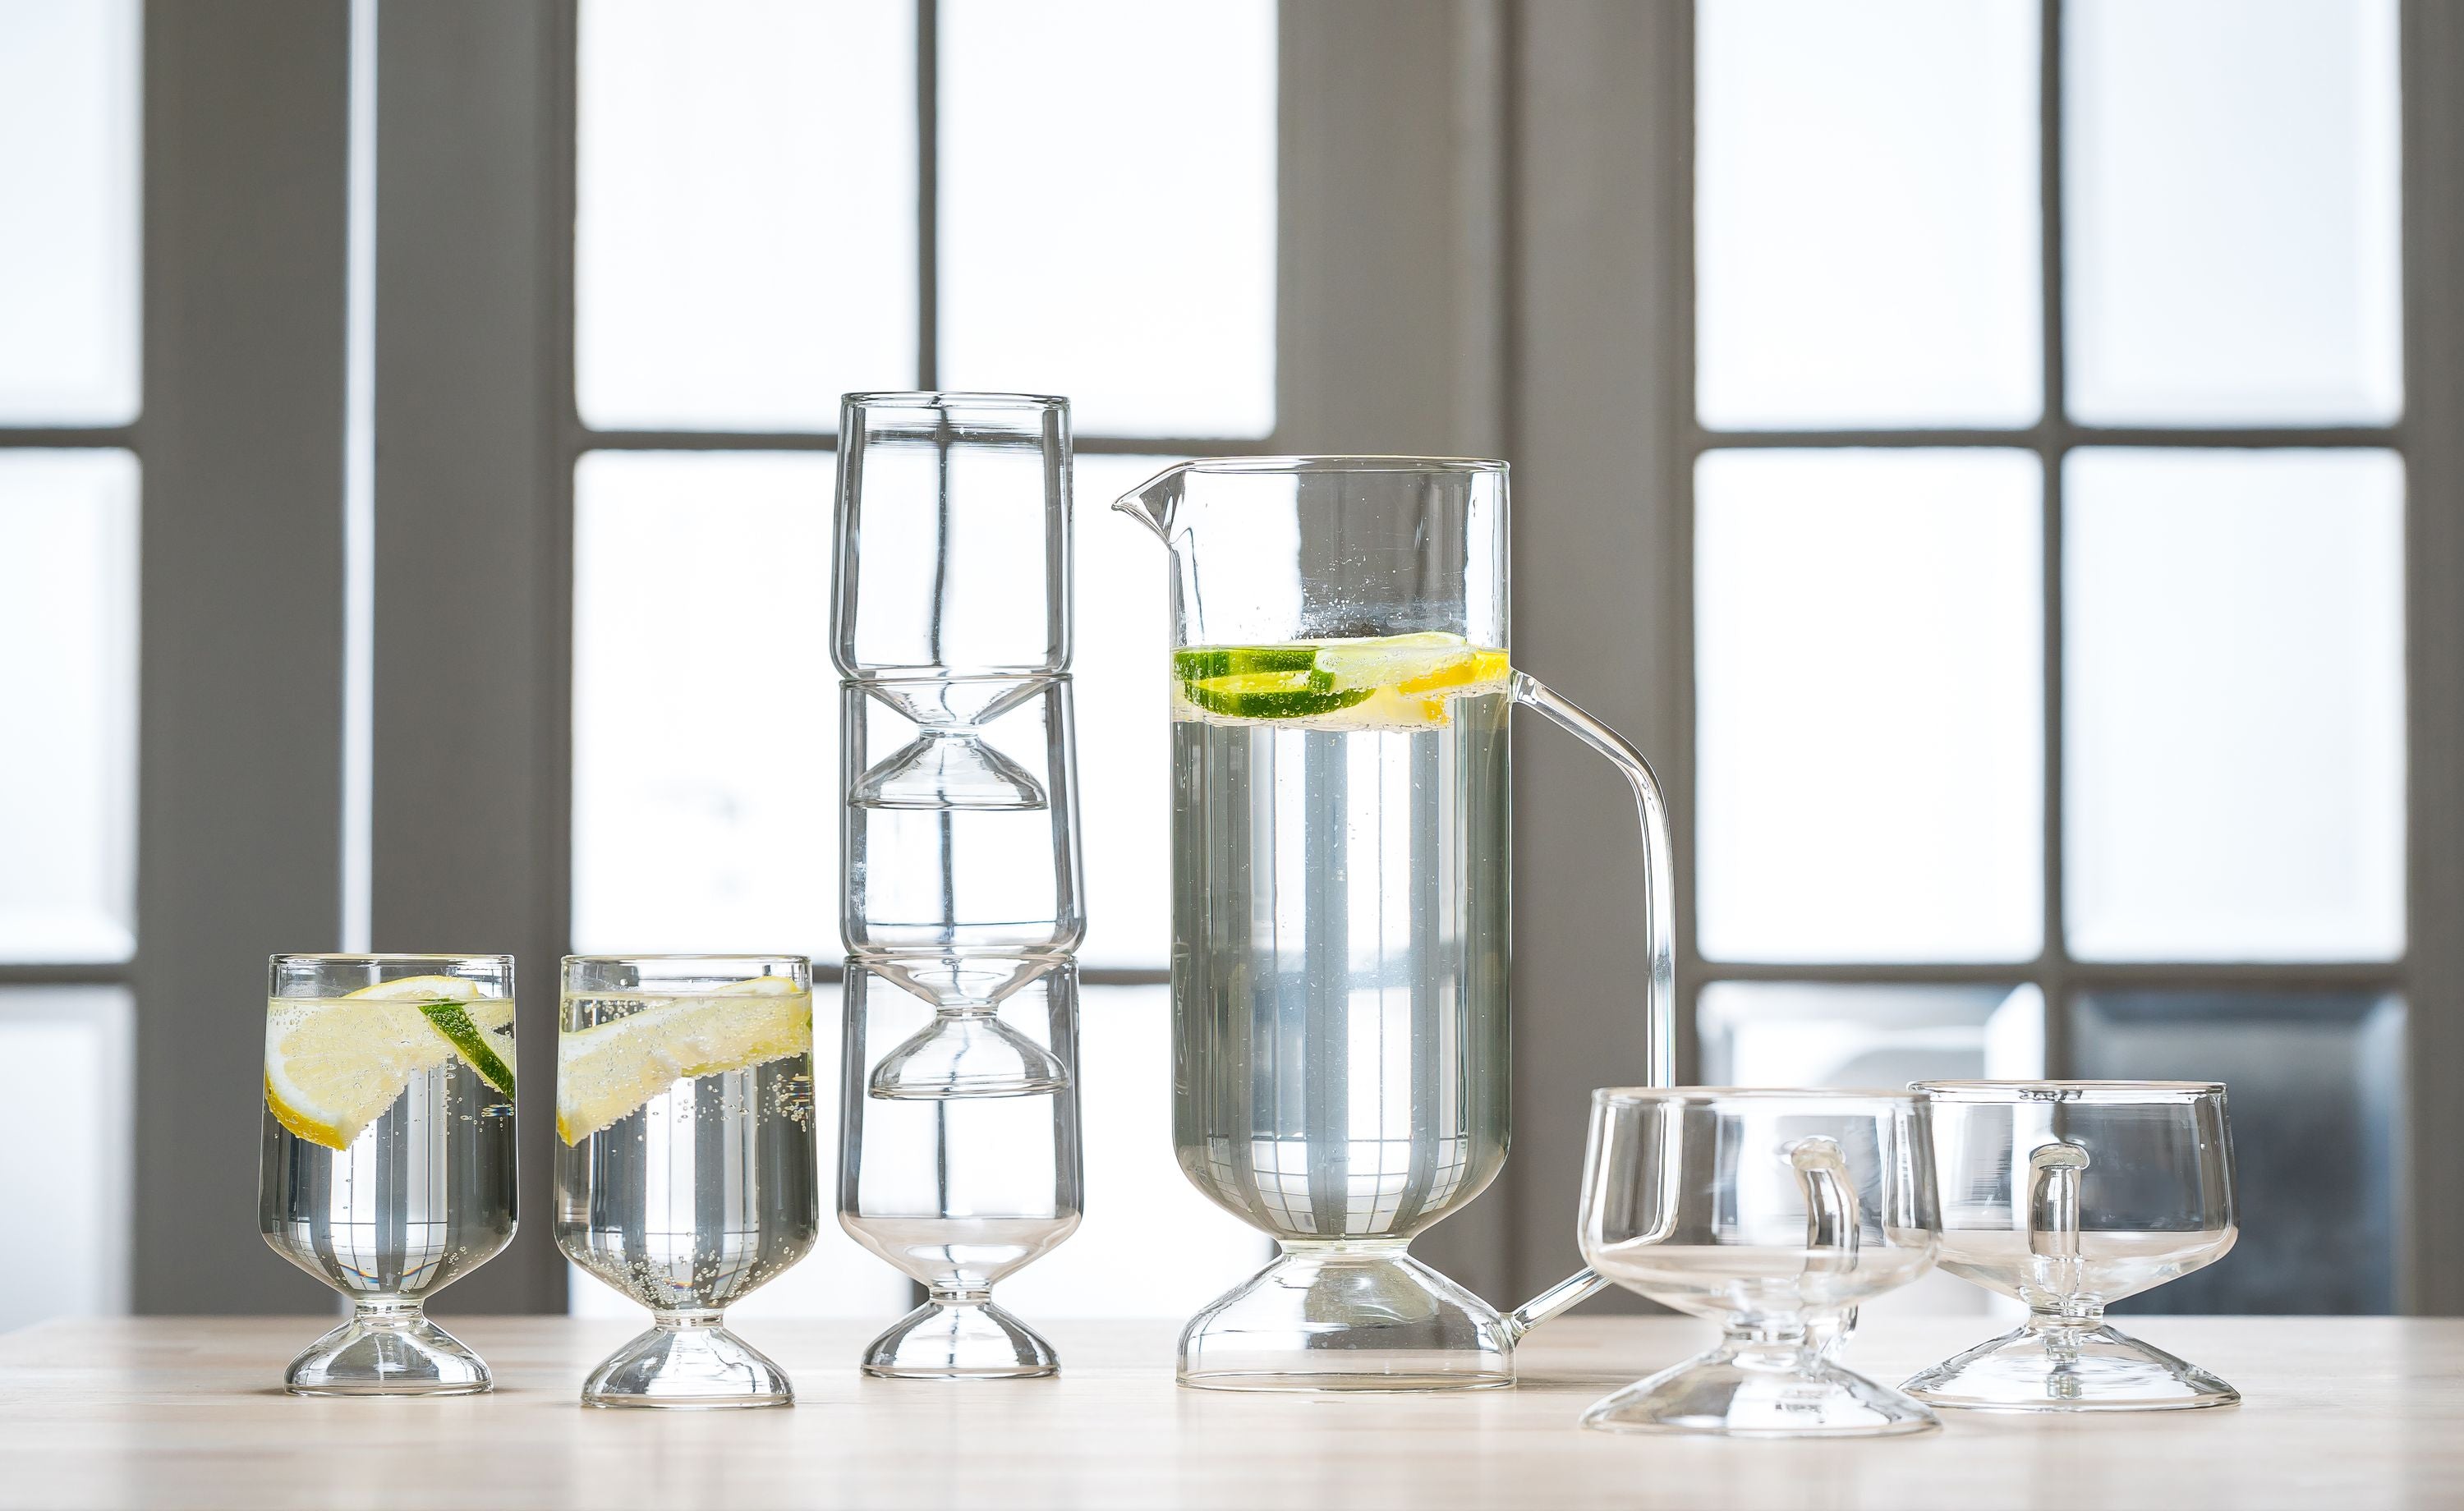 Muurla Olo -serie Hot Drink Glass, 2 pc's